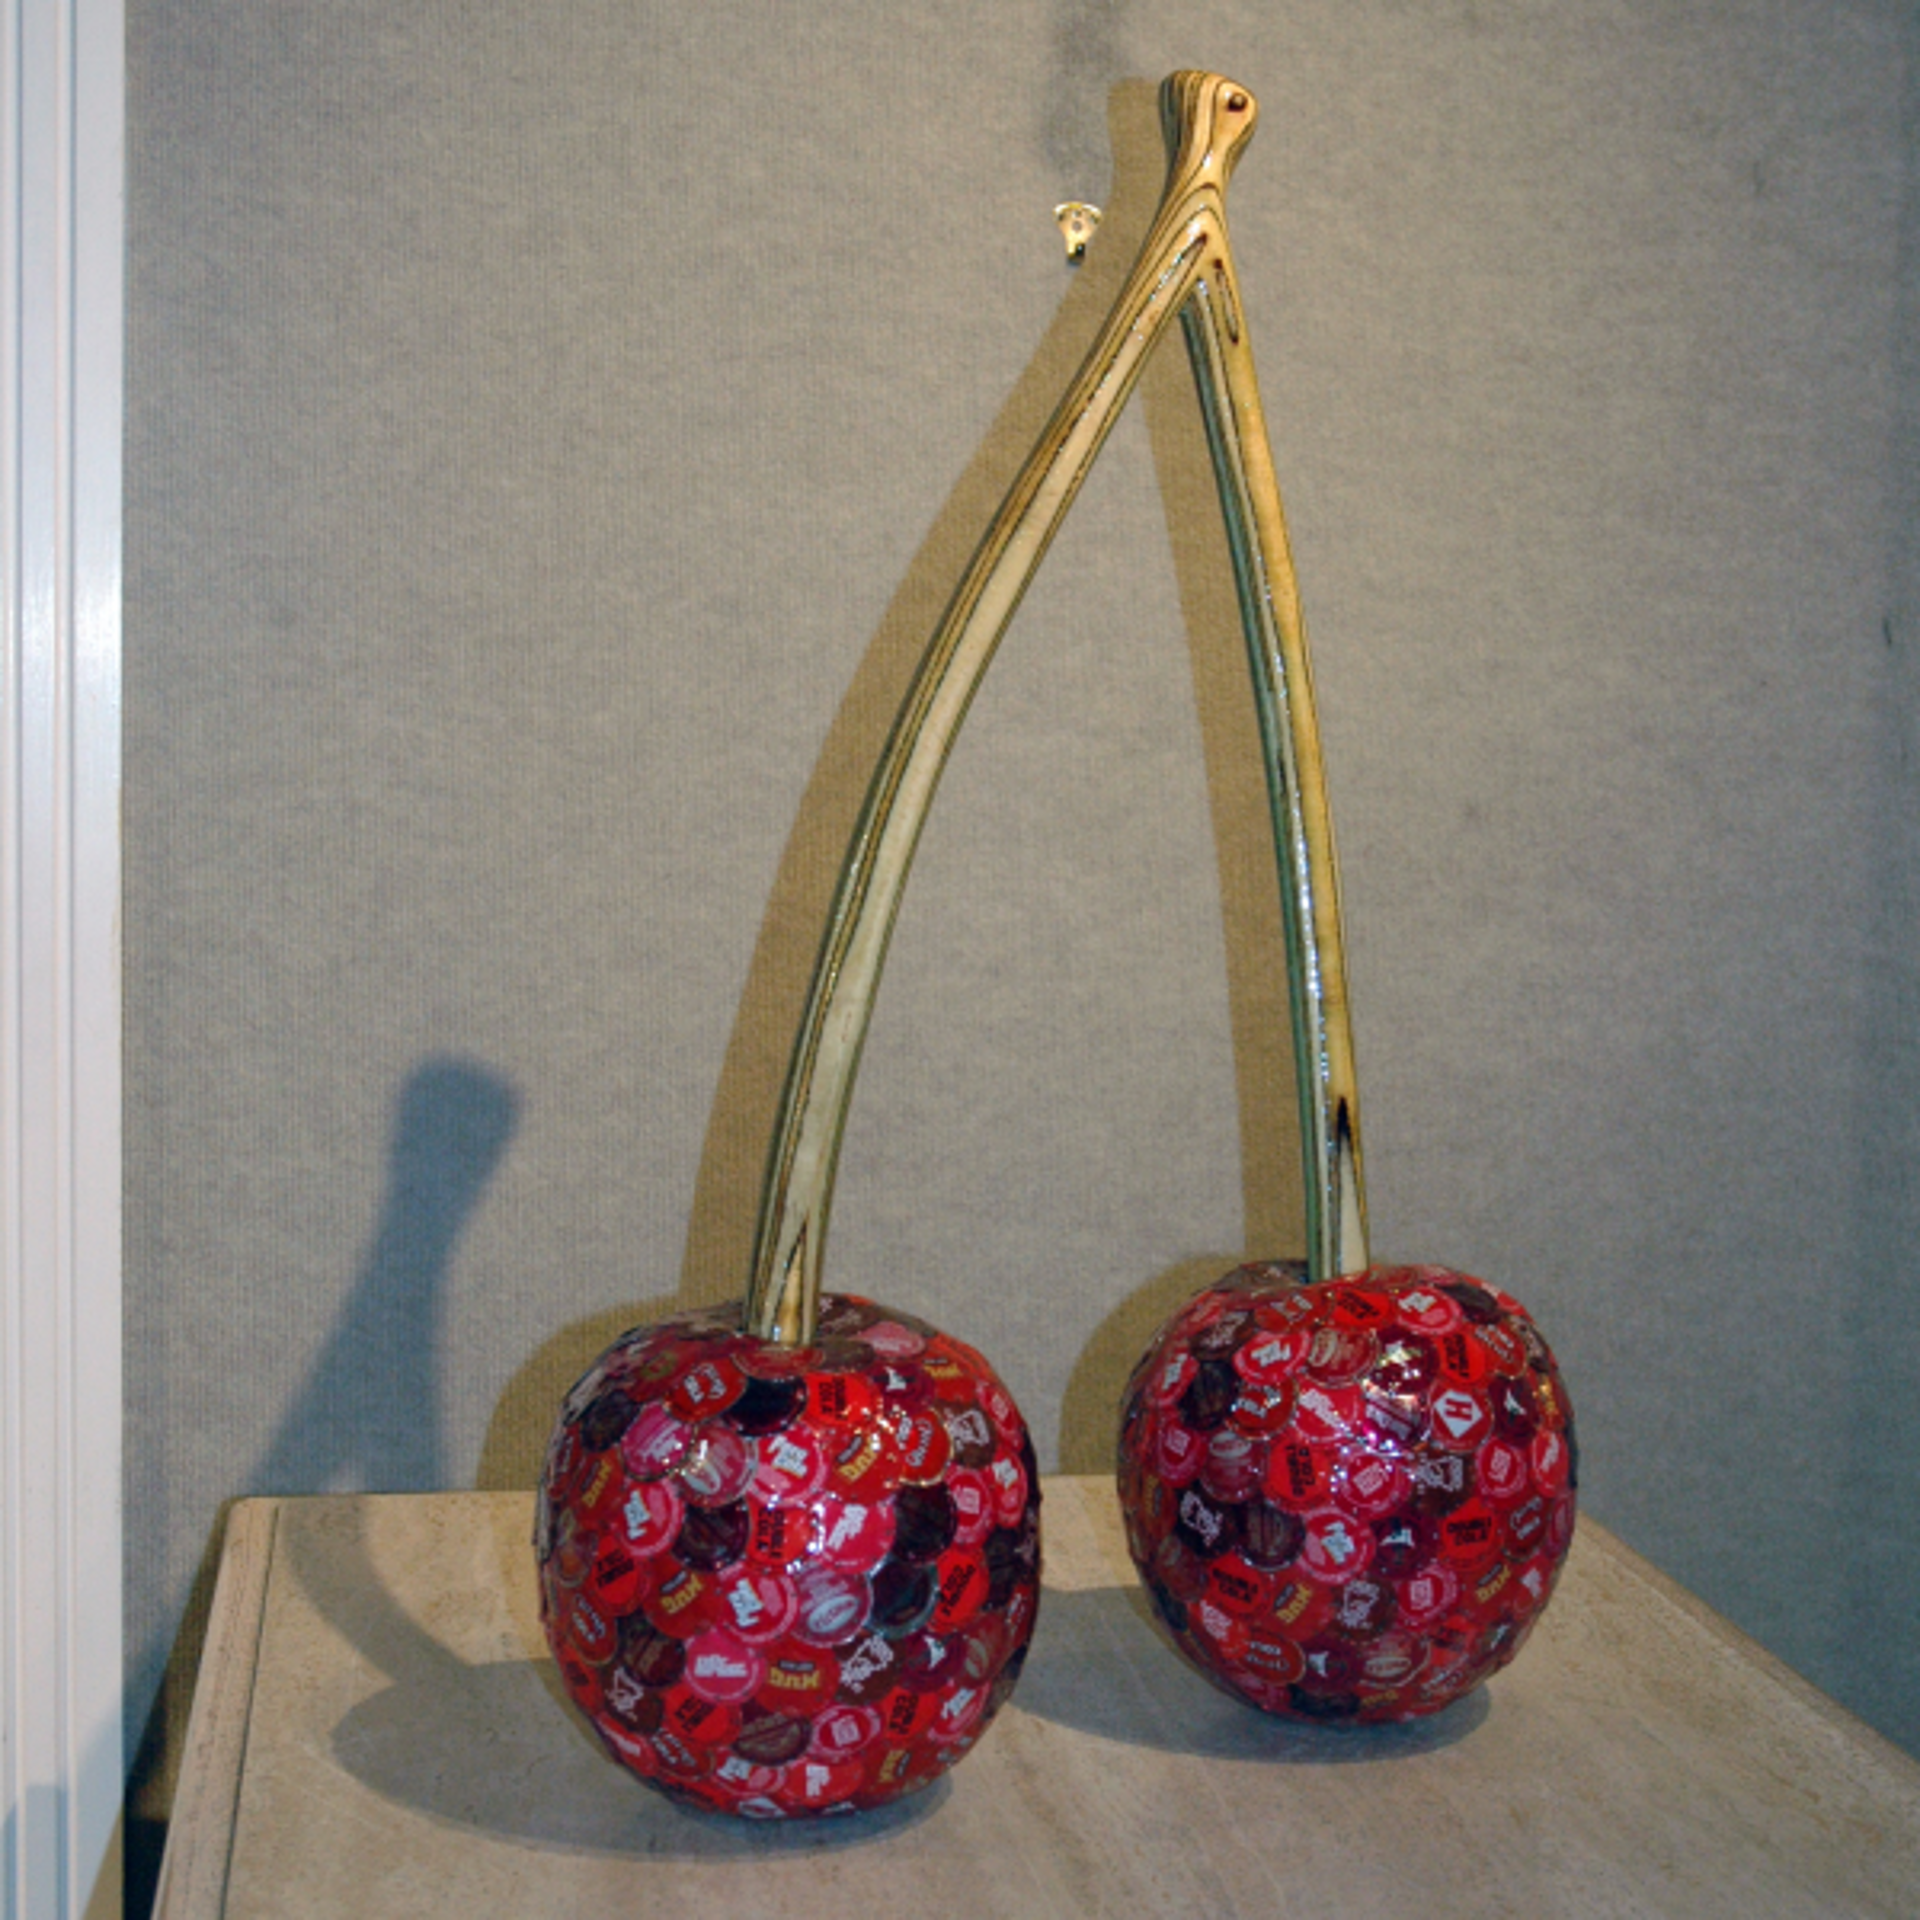 Cherries (Small, Ply Stem) by Dakota Pratt